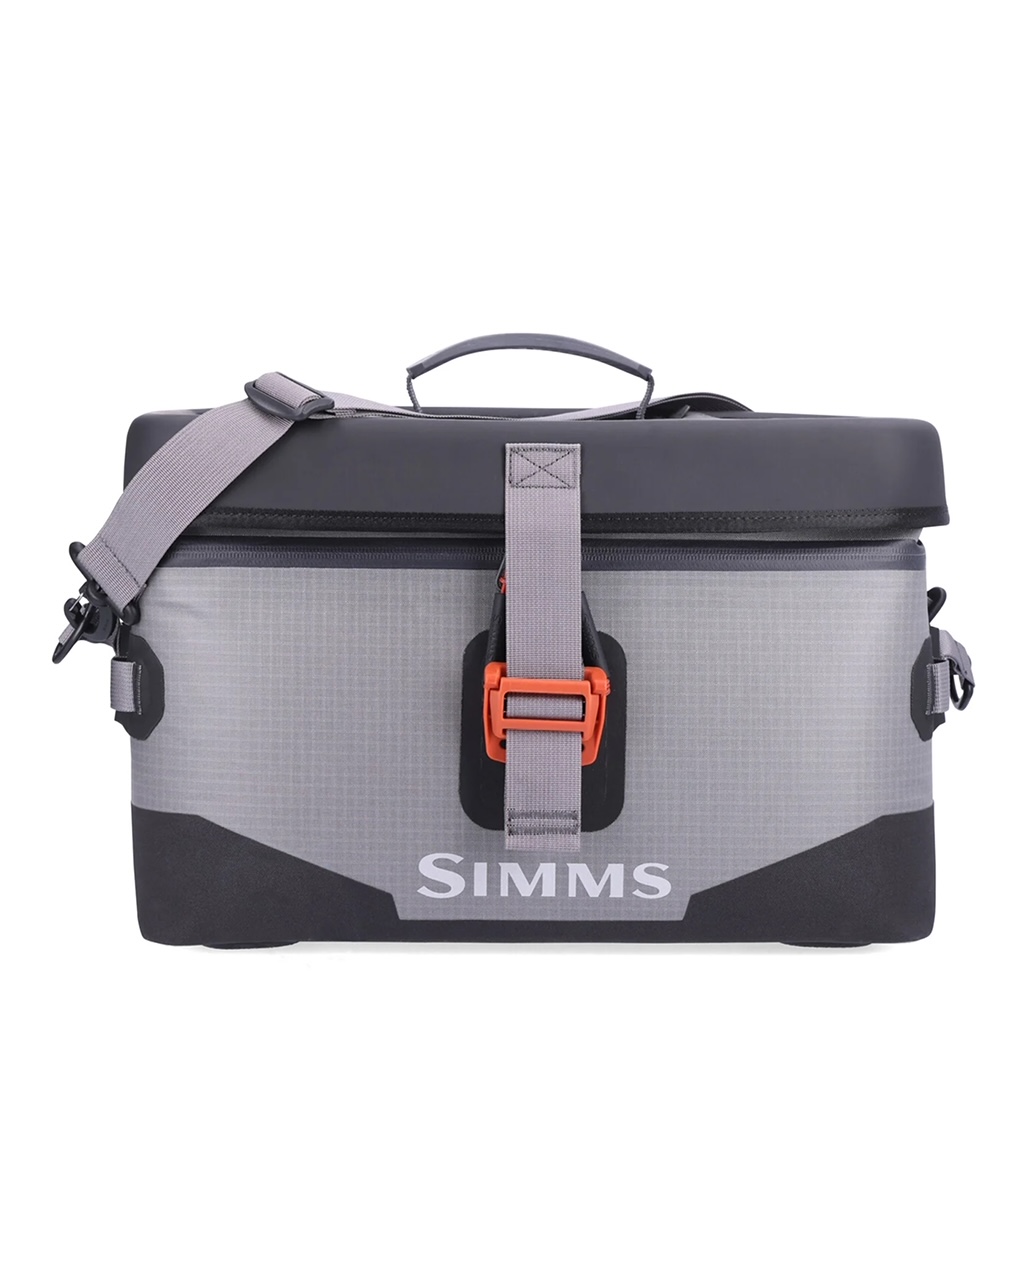 Simms Dry Creek Boat Bag - Small (20L)